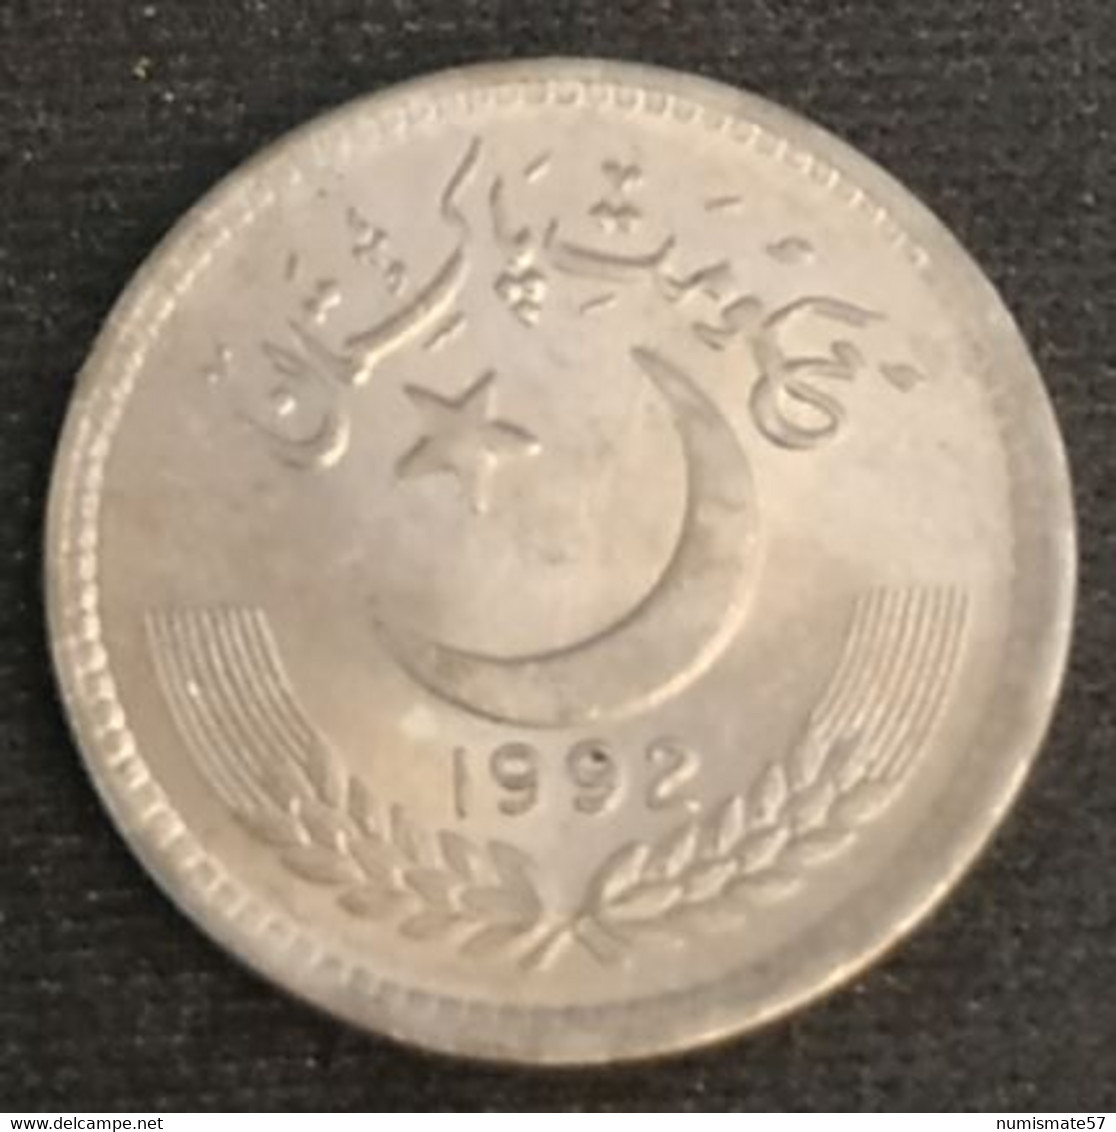 PAKISTAN - 25 PAISA 1992 - Neuve - UNC - KM 58 - ( PAISE ) - Pakistan